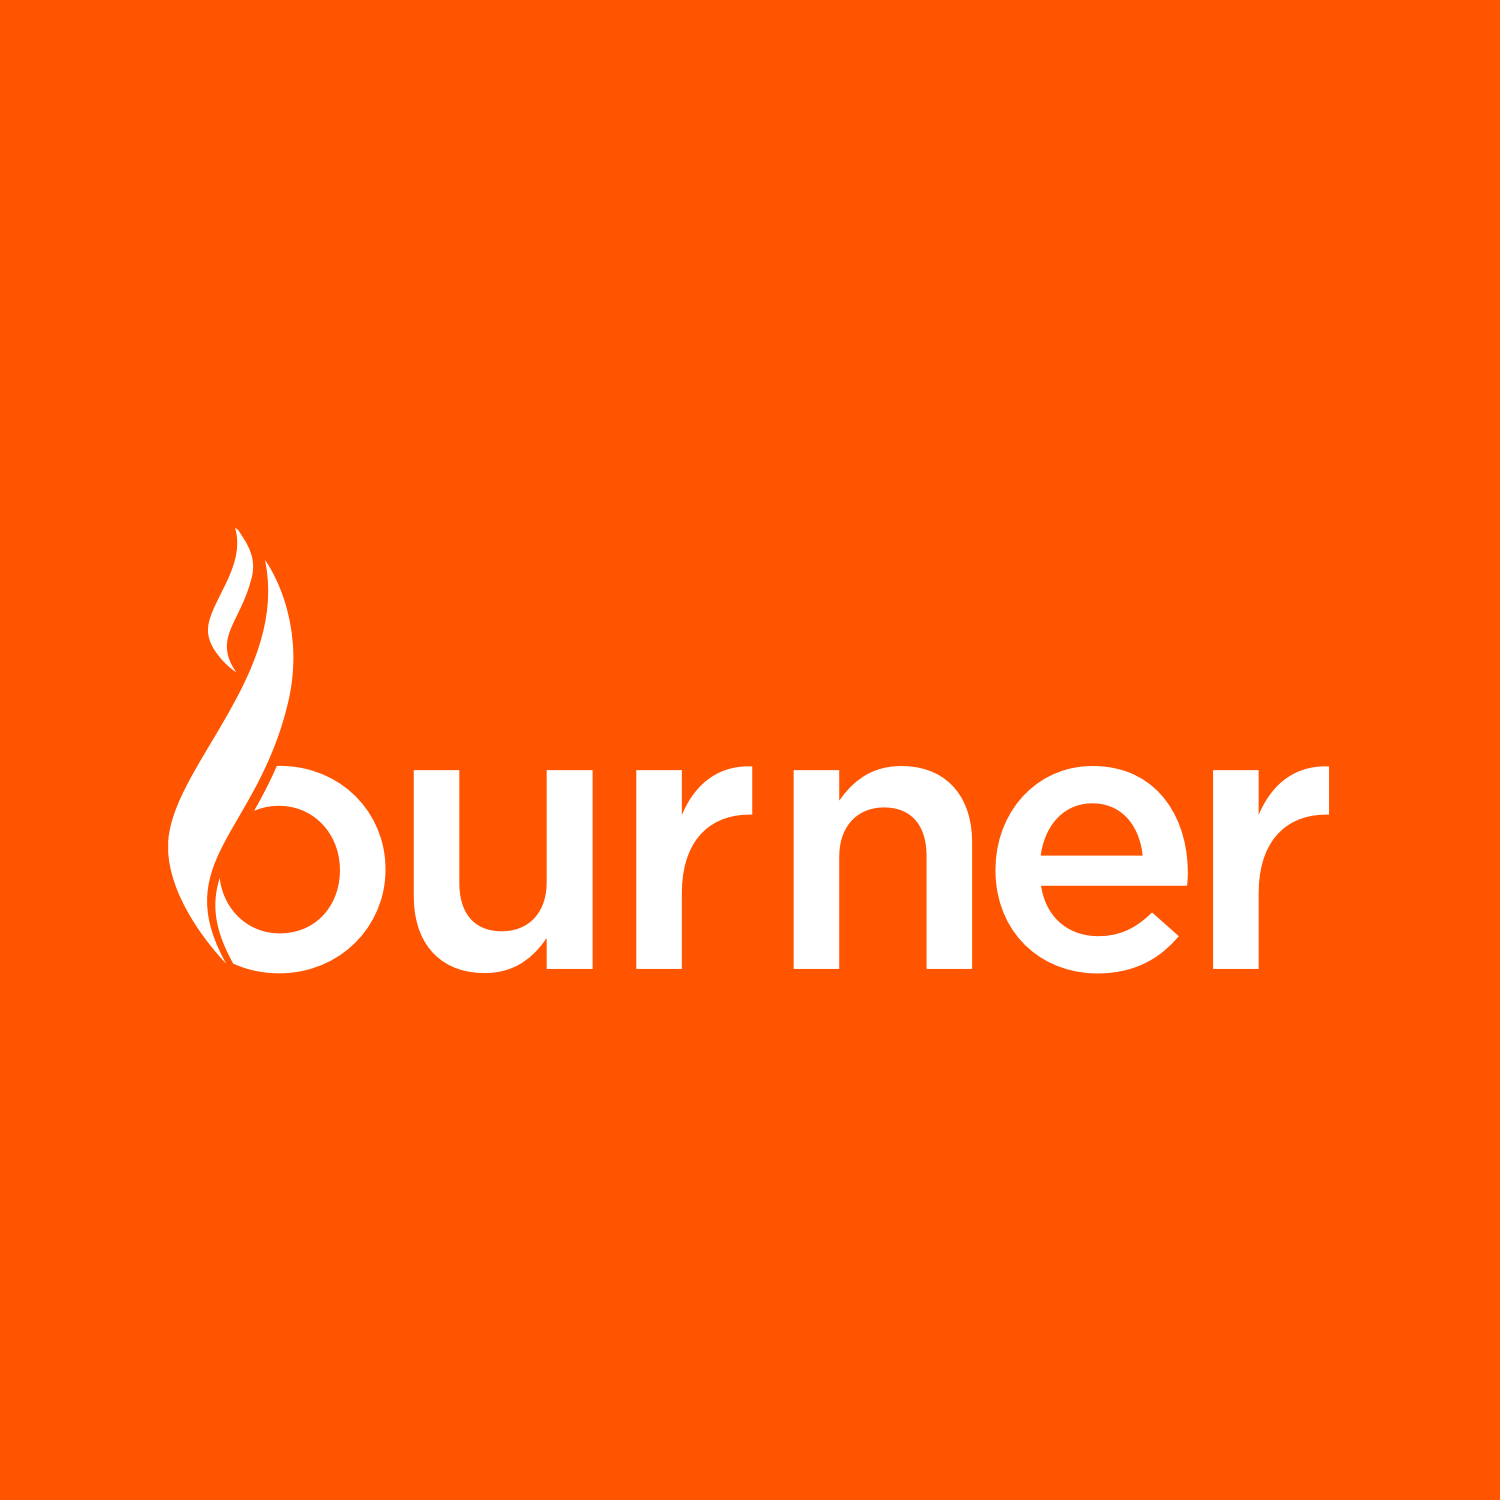 Burner Logo - File:Burner Logo.png - Wikimedia Commons